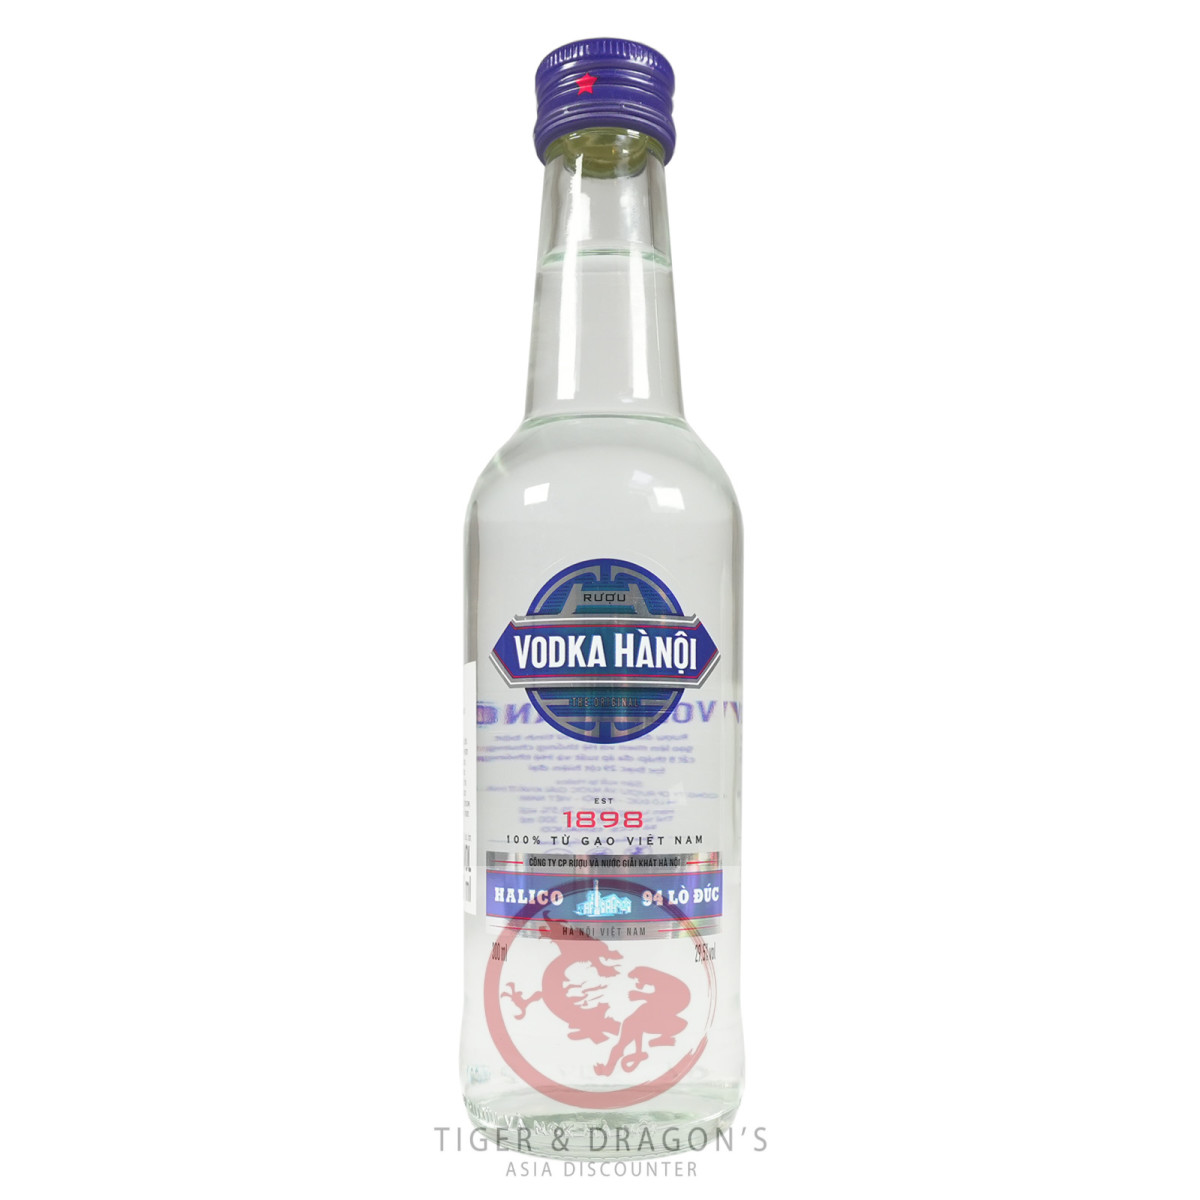 Halico Vodka Hanoi Alc. 29,5% Vol. 300ml